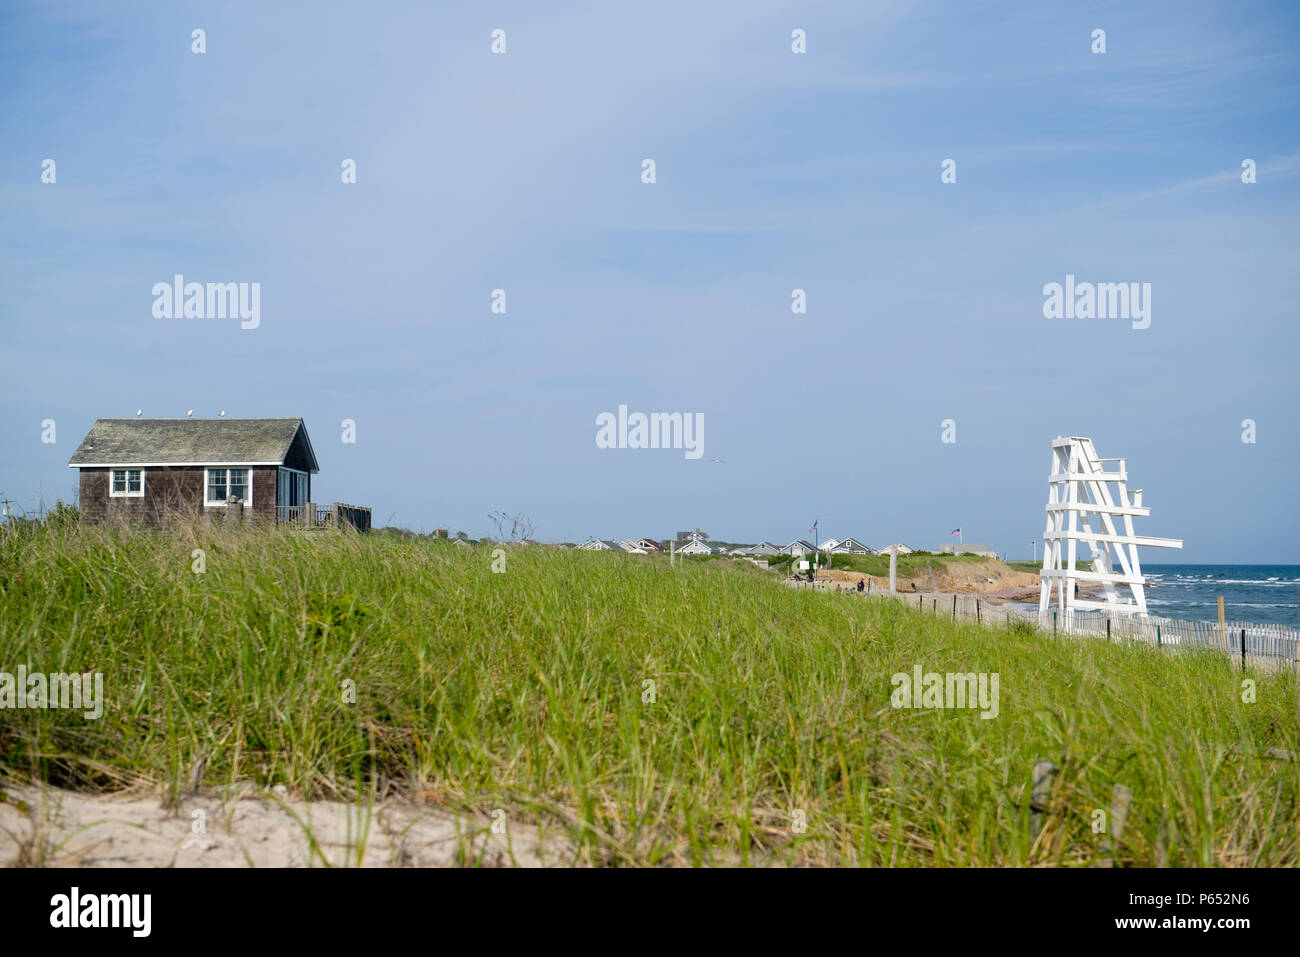 beach scene with beach house scrub brush and lifeguard chair on Ditch Plains Beach Montauk, New York, The Hamptons Stock Photo